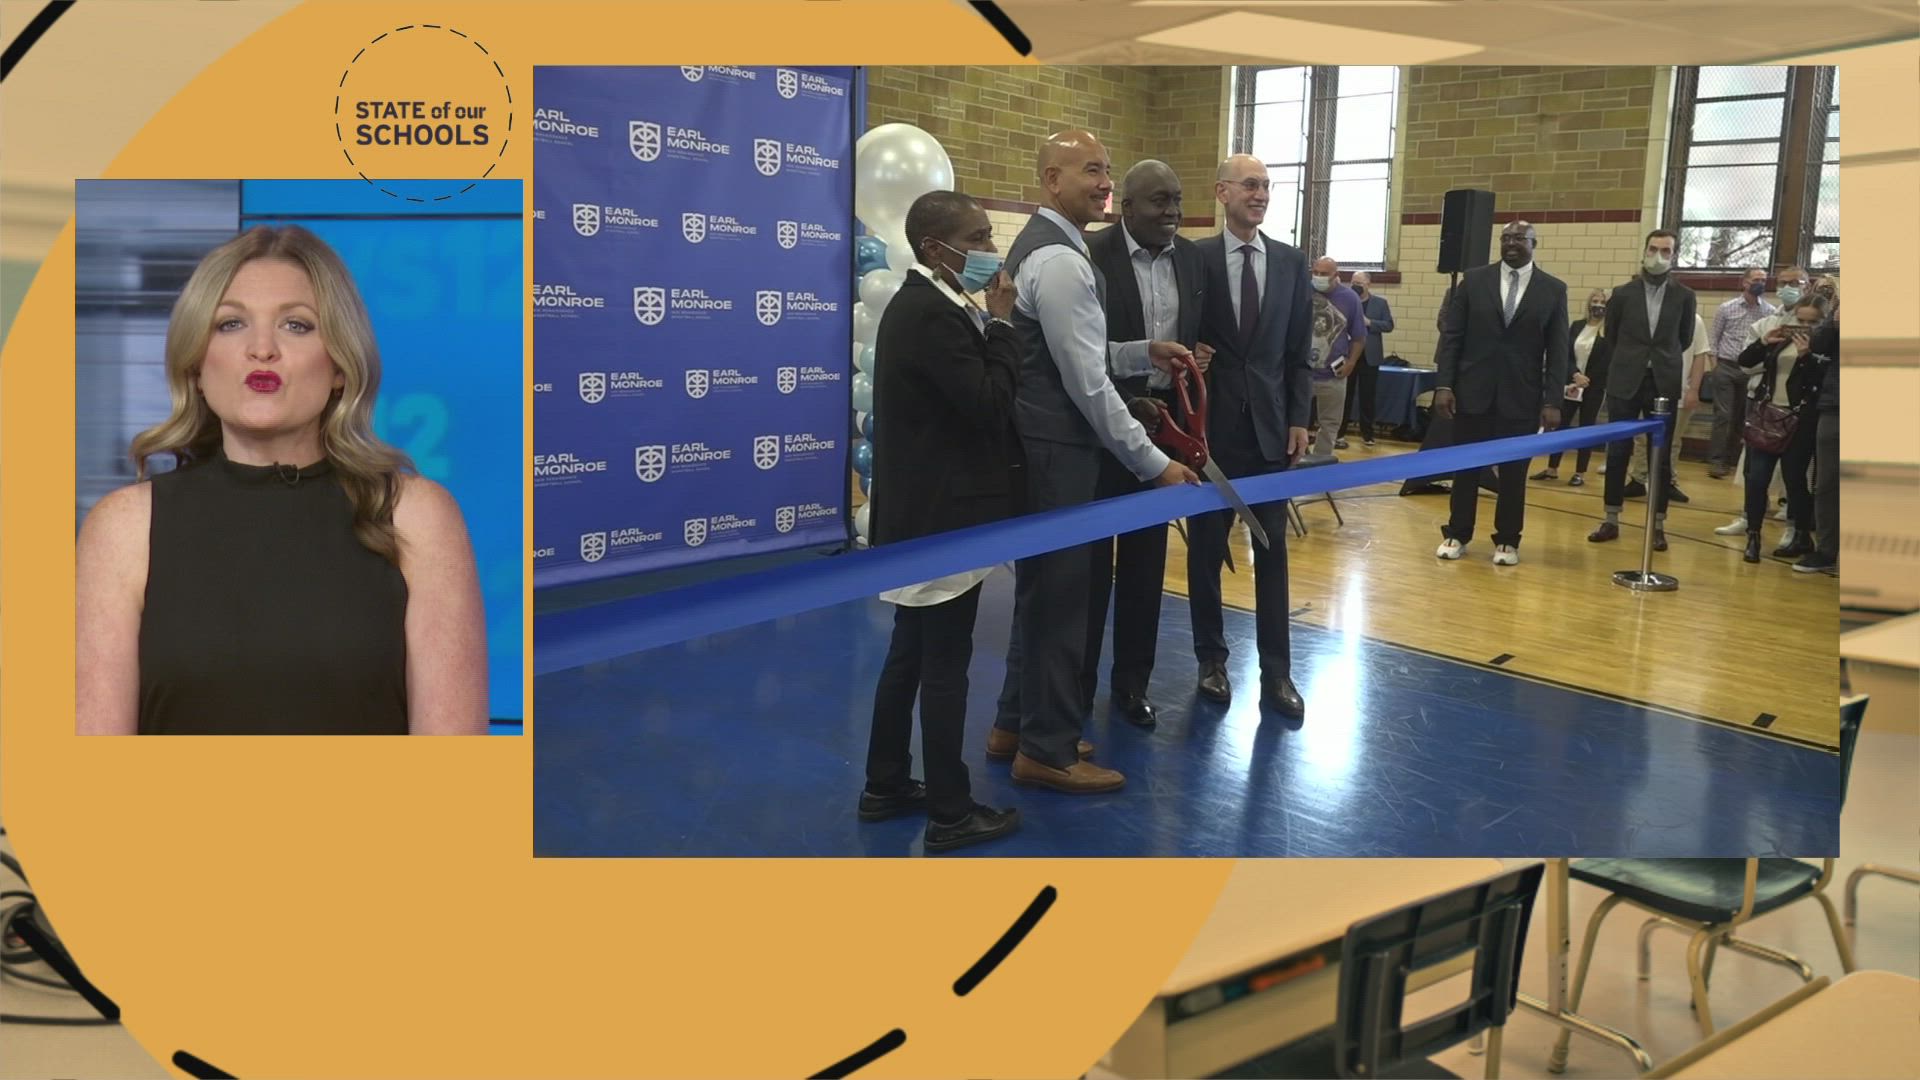 Basketball high school: Earl Monroe New Renaissance Basketball School holds  ribbon cutting ceremony in the Bronx - ABC7 New York